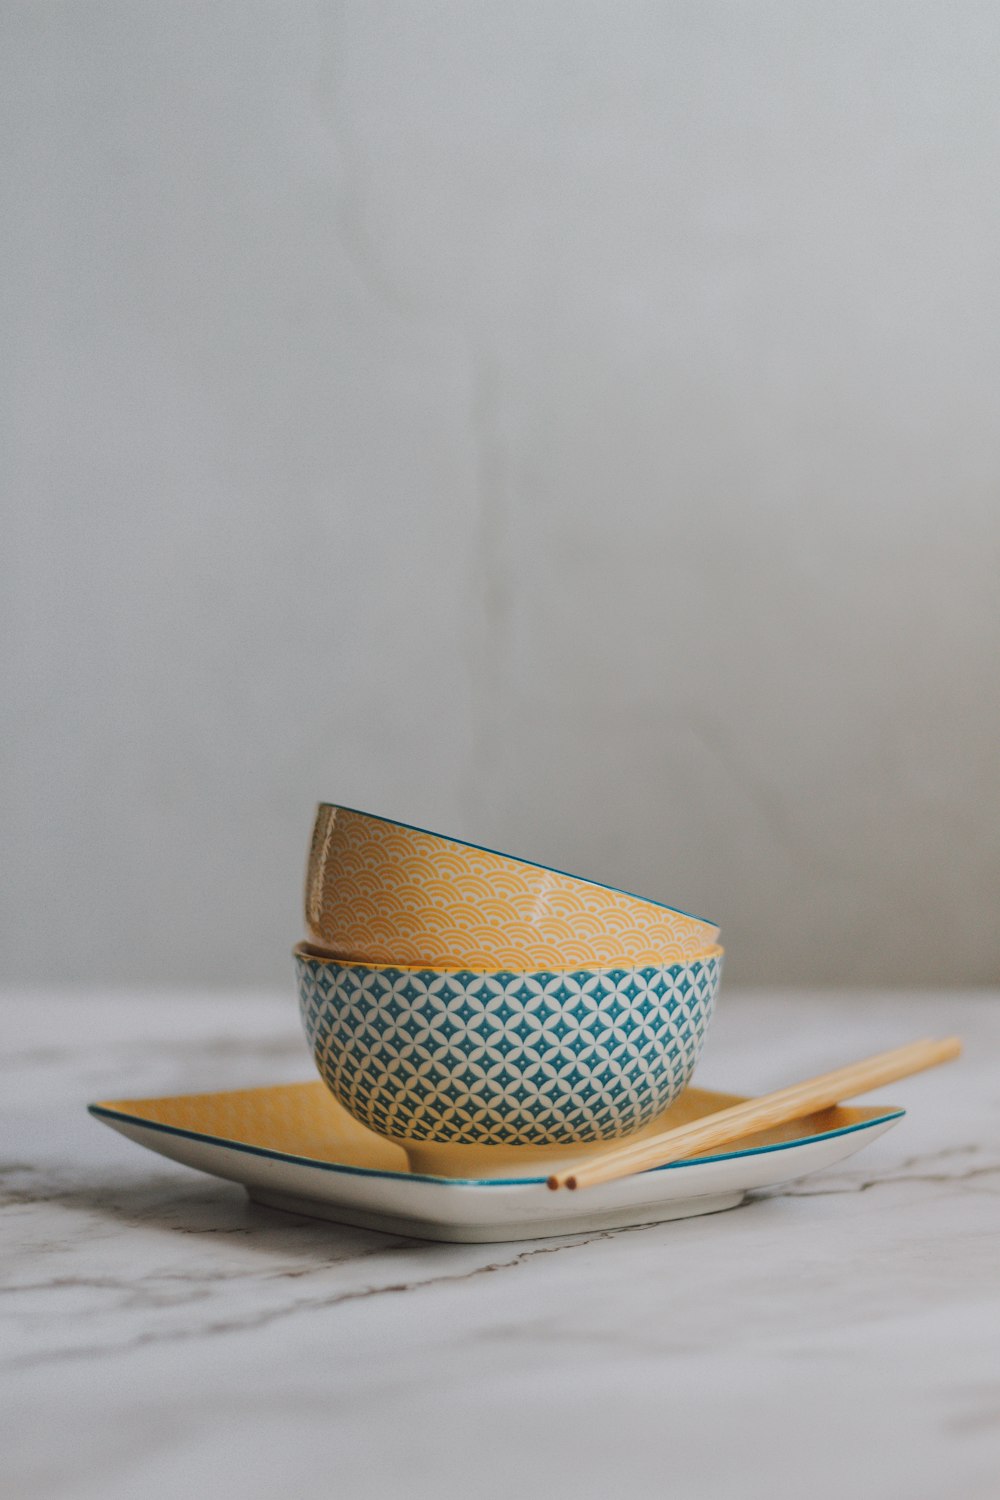 white and blue polka dot ceramic mug on white and blue plate